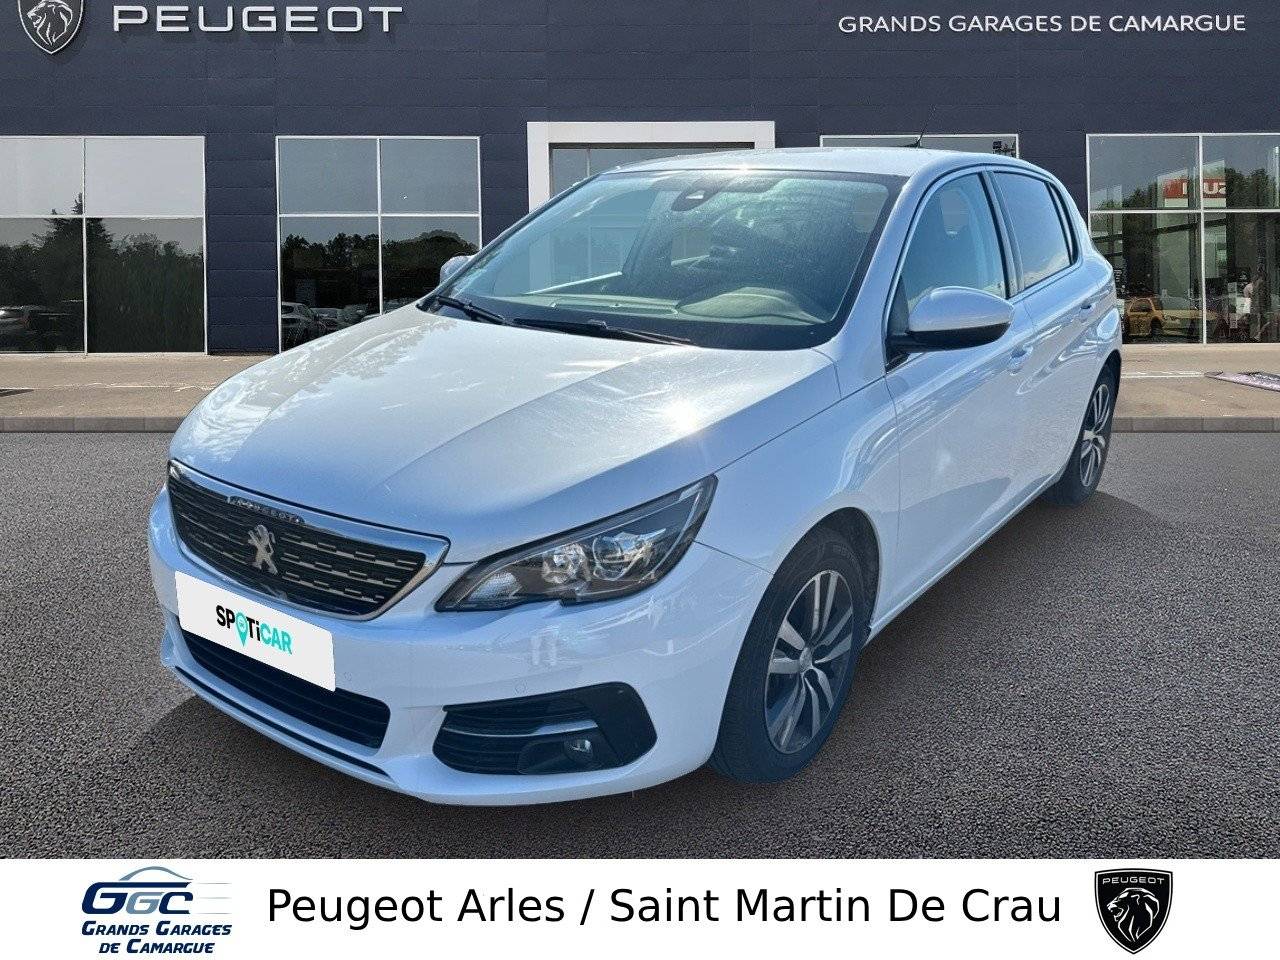 PEUGEOT 308 | 308 BlueHDi 130ch S&S BVM6 occasion - Peugeot Arles